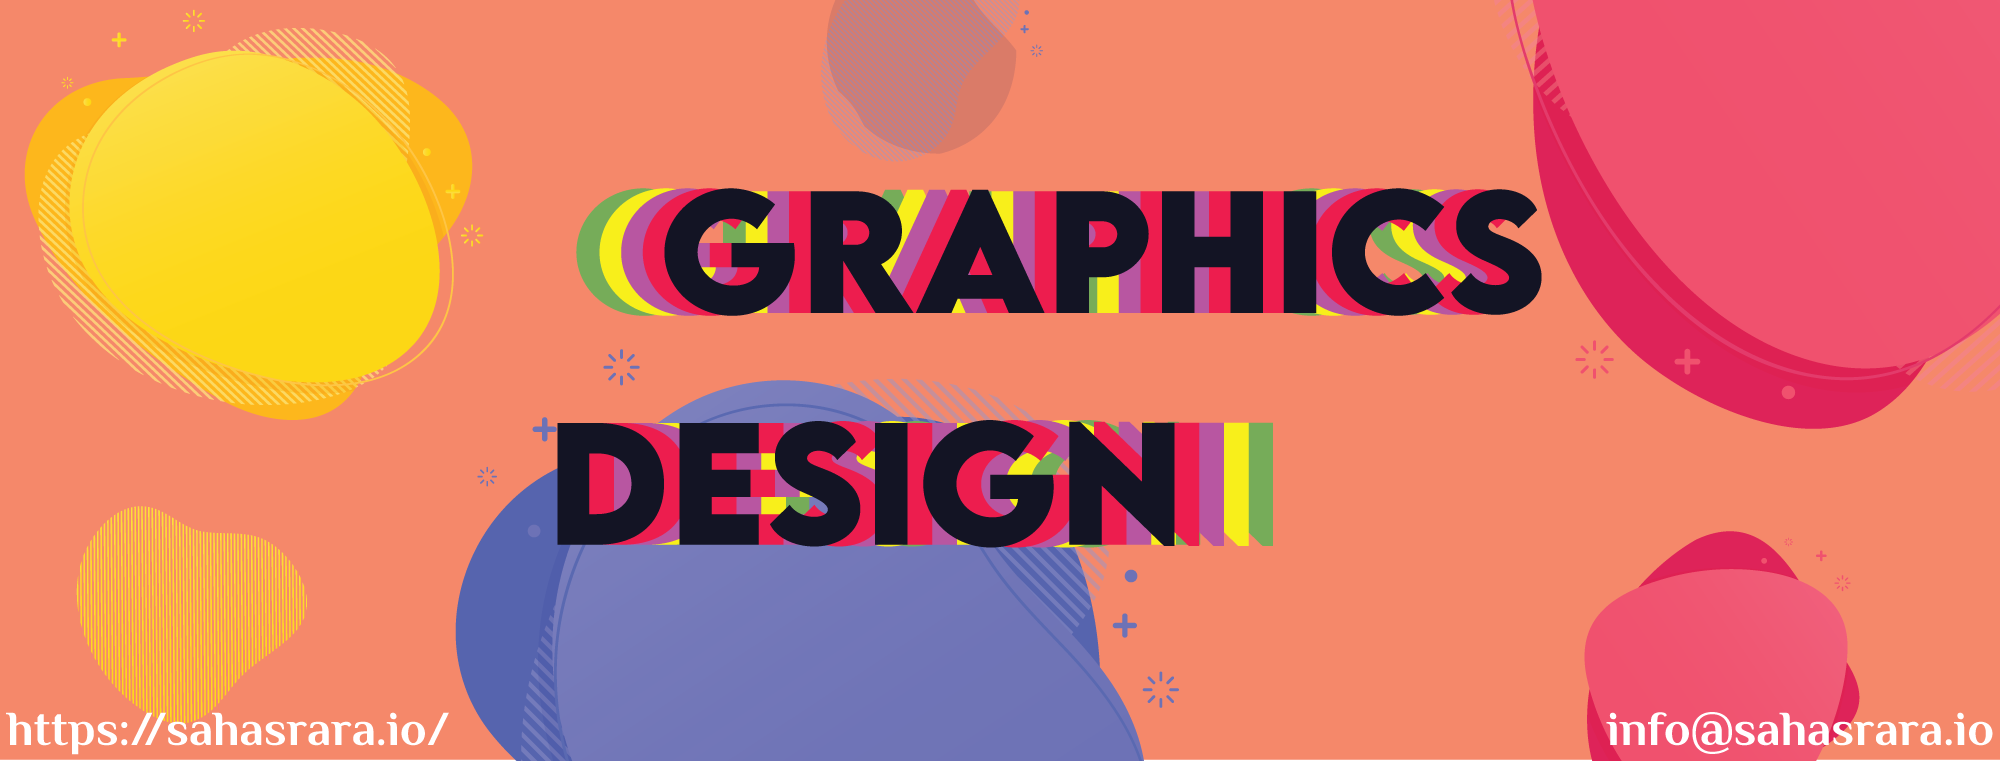 Graphics Design Cover